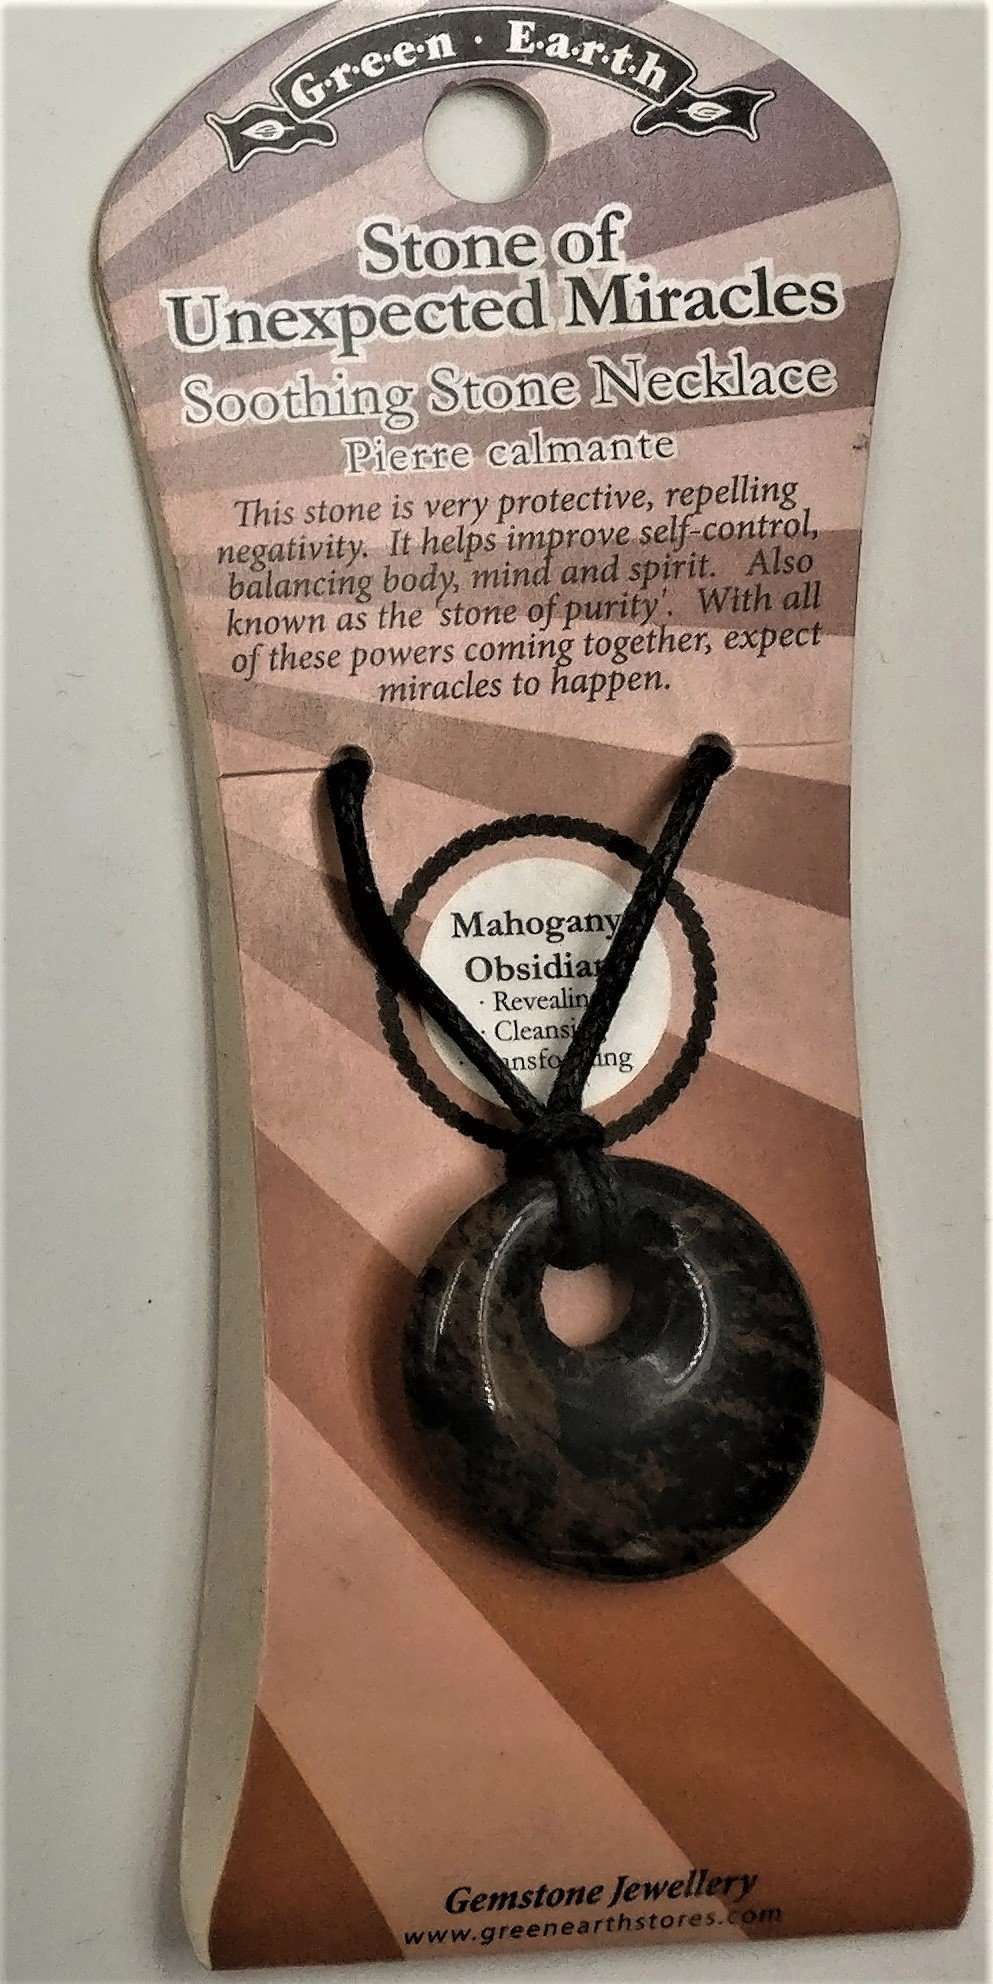 Mahogany obsidian pendant - Rivendell Shop